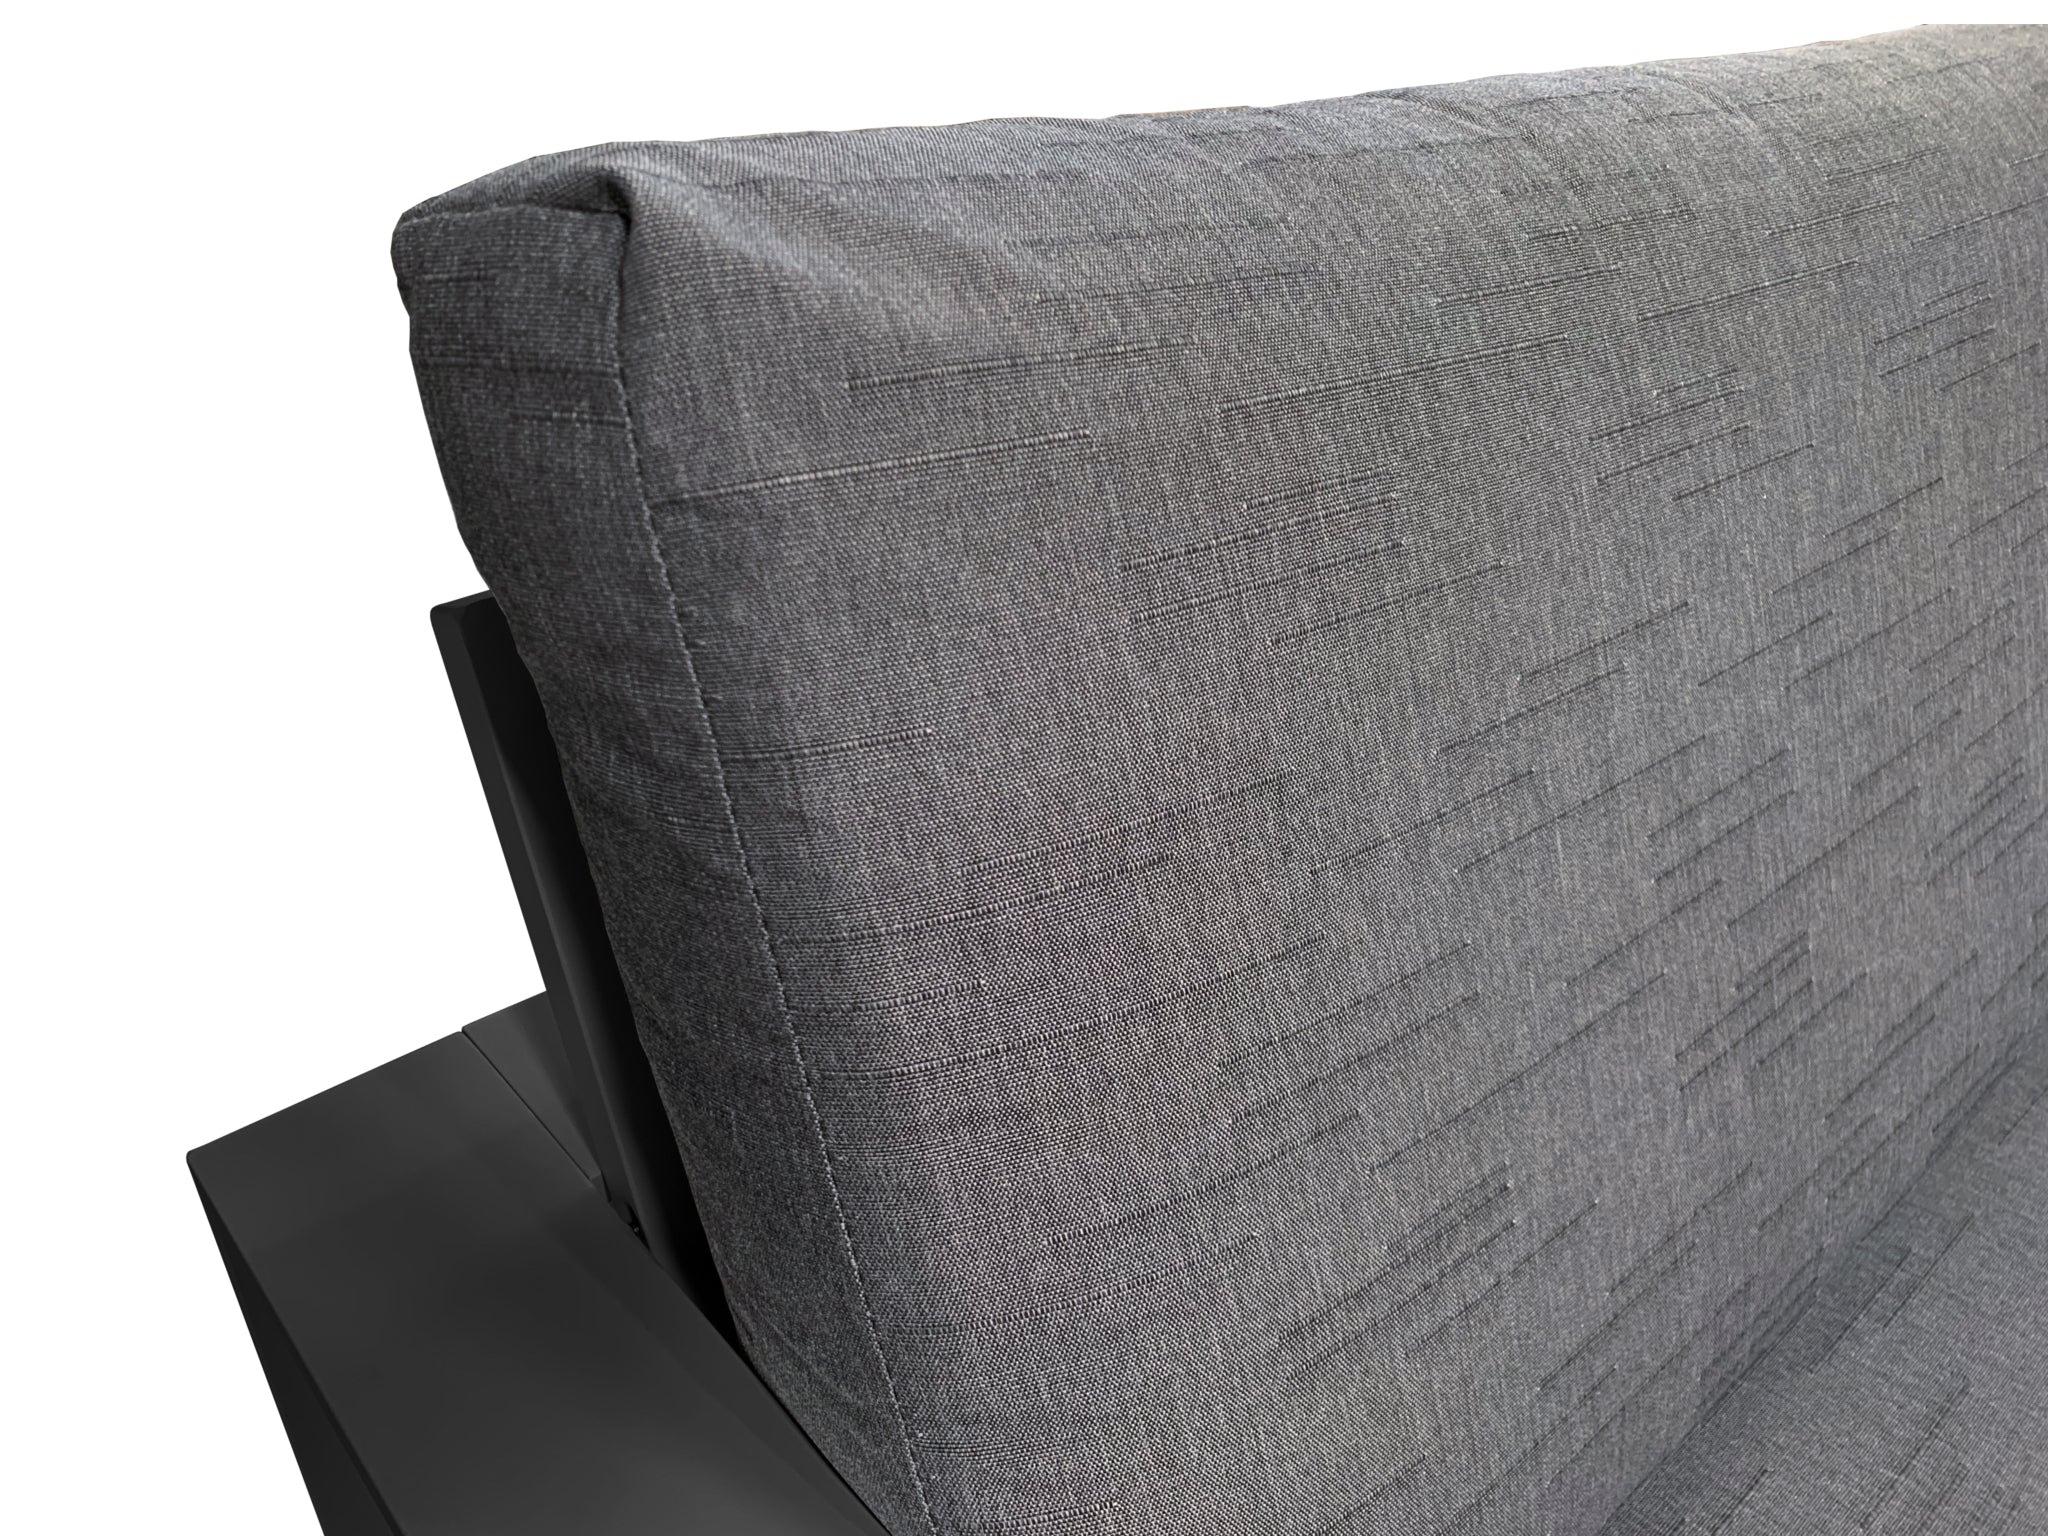 FurnitureOkay Manly Aluminium Outdoor Sofa (3-Seater) — Charcoal